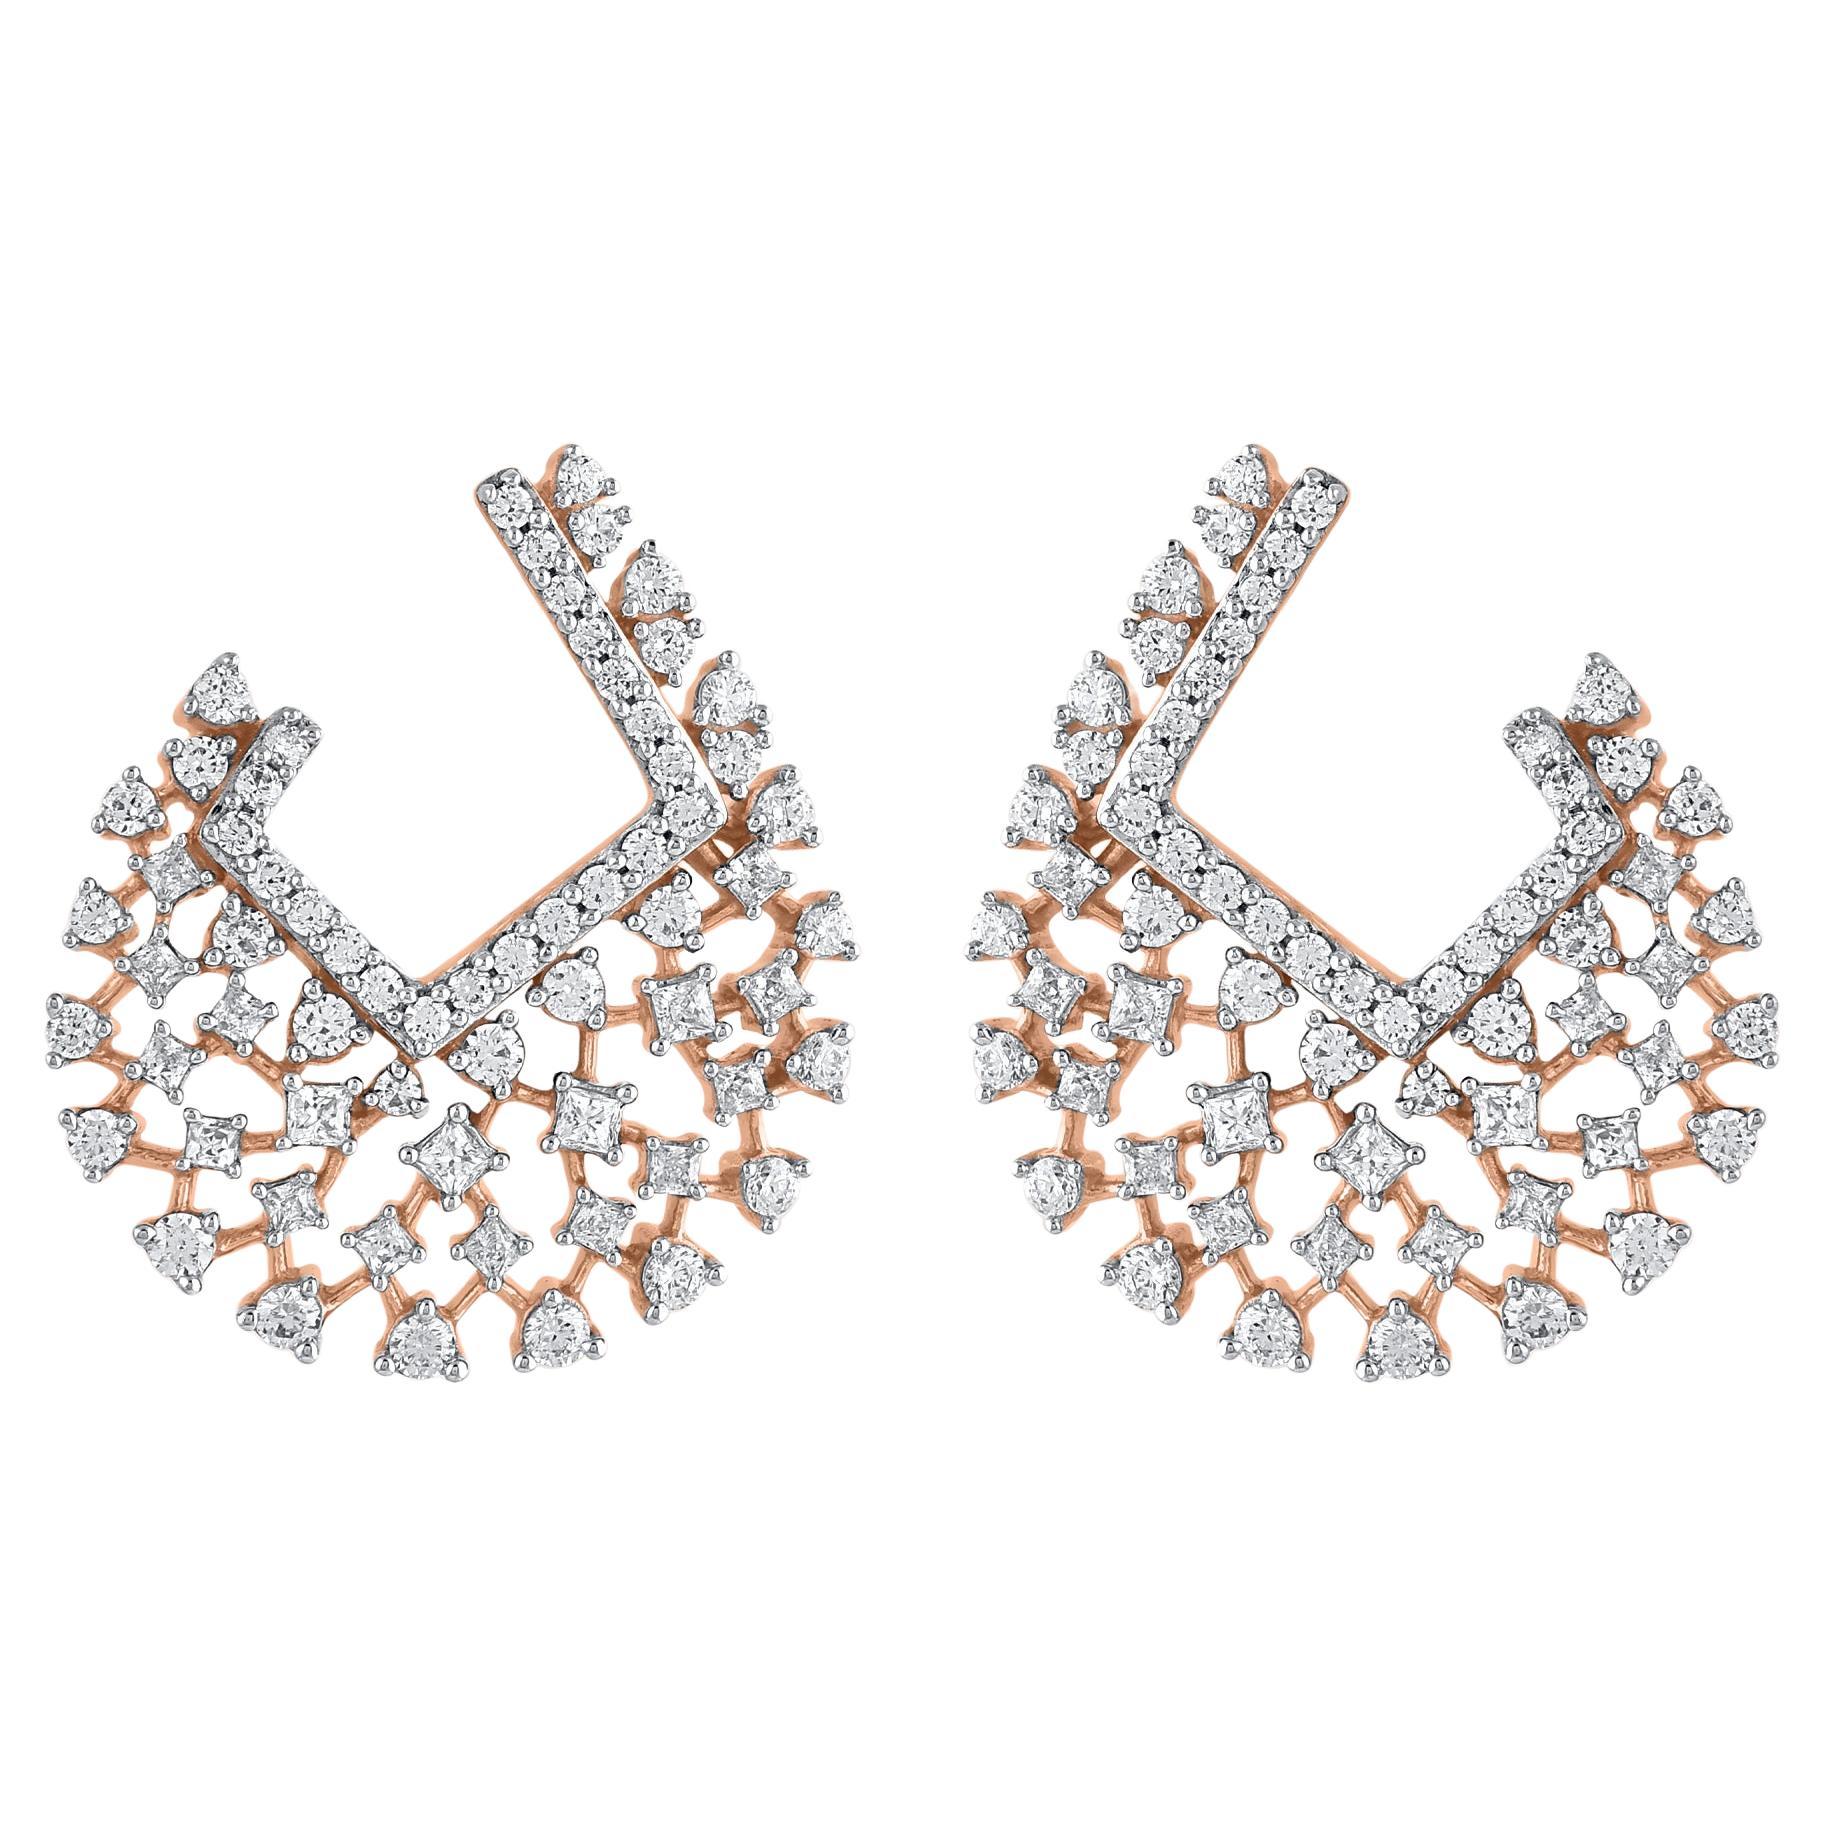 TJD 2.0 Carat Natural Diamonds Designer Stud Earrings in 18 Karat Rose Gold